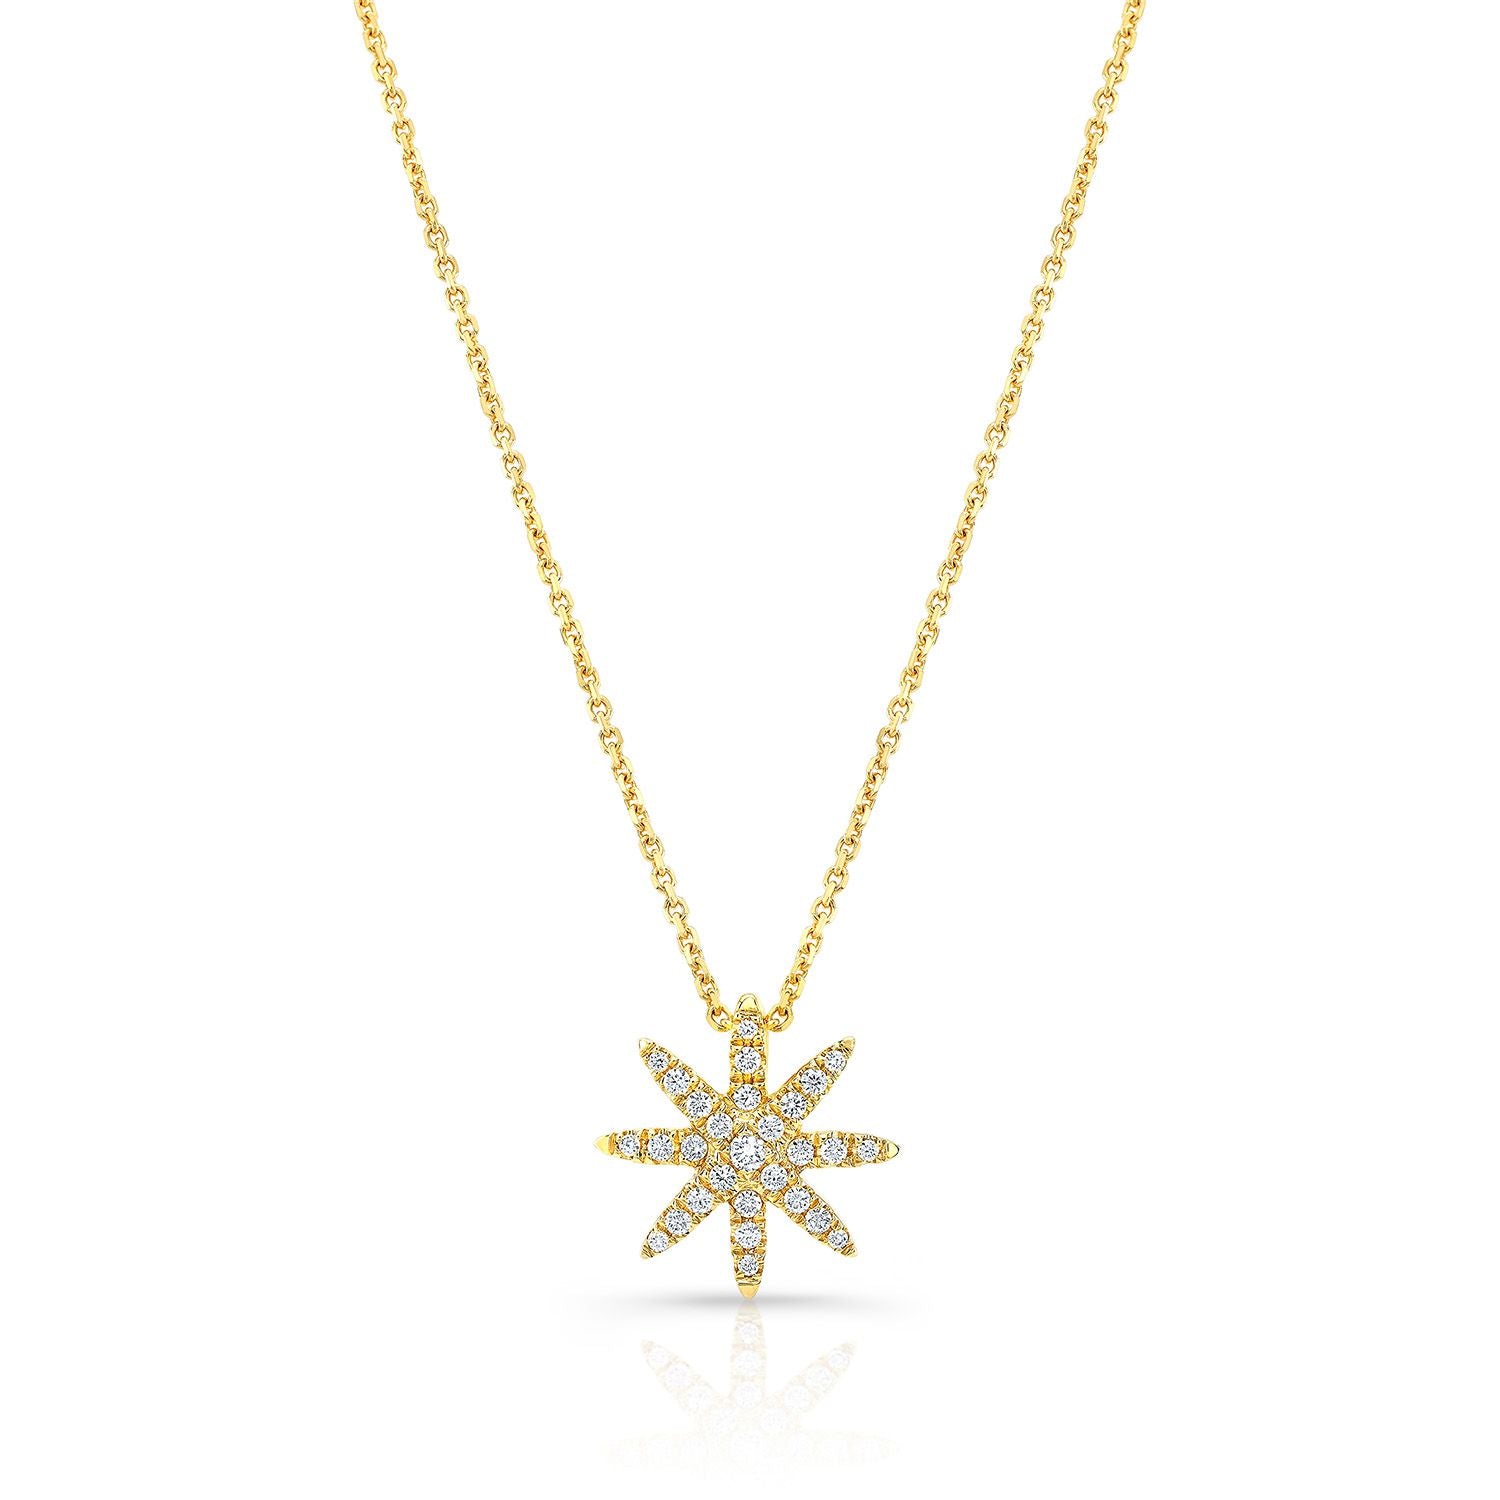 Sterling Silver Oxidized 8 Pointed Star Octagram Necklace Bracelet Pendant  | eBay